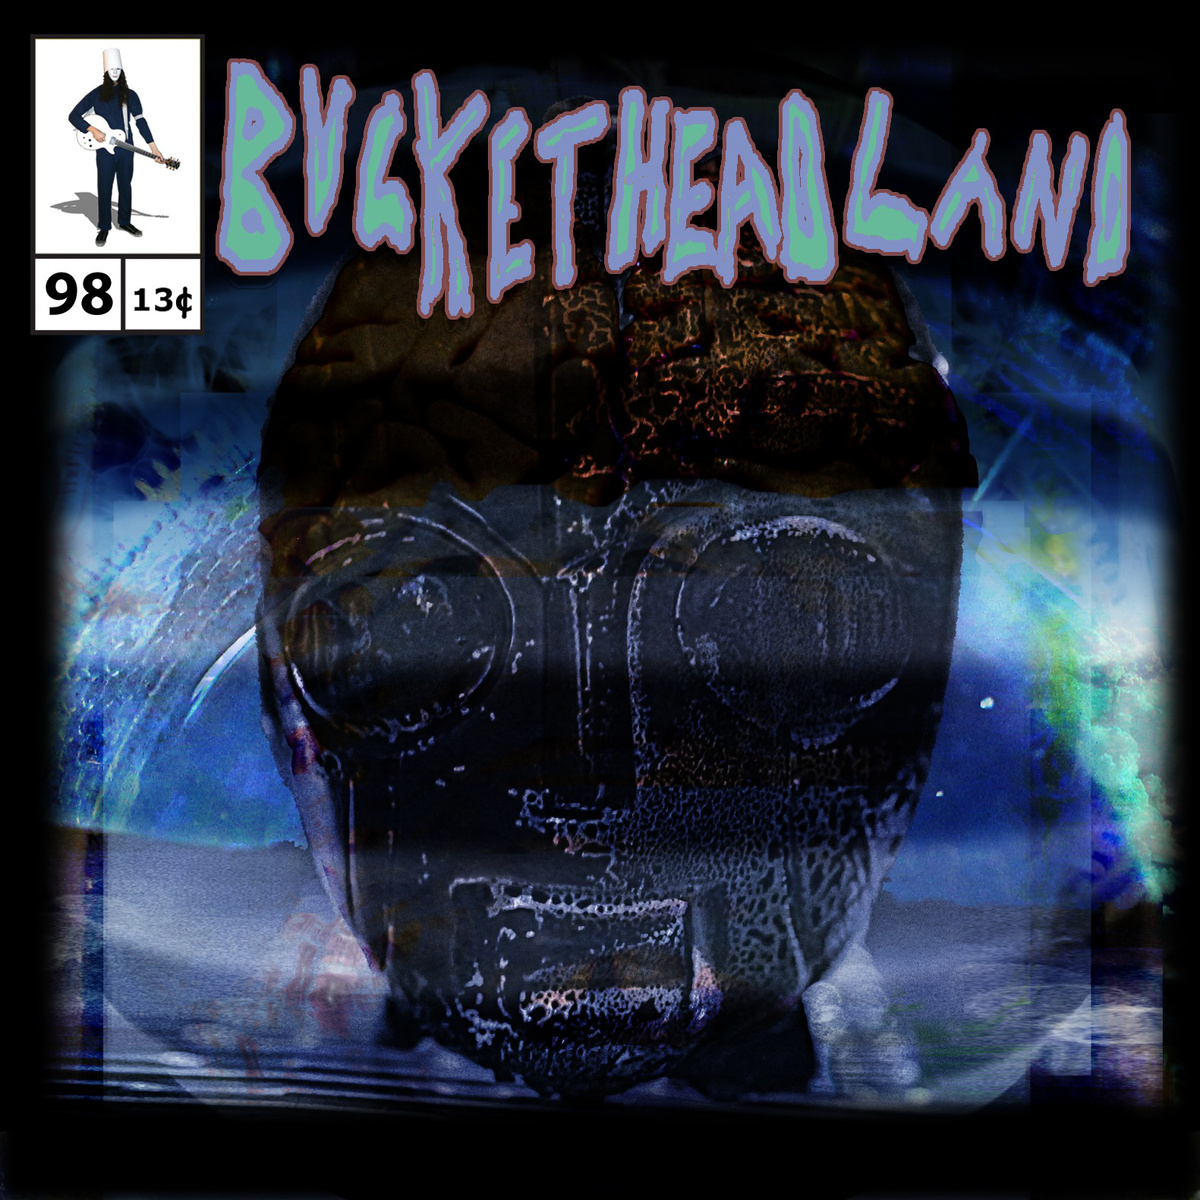 Buckethead - Pike 98: Pilot (2014)